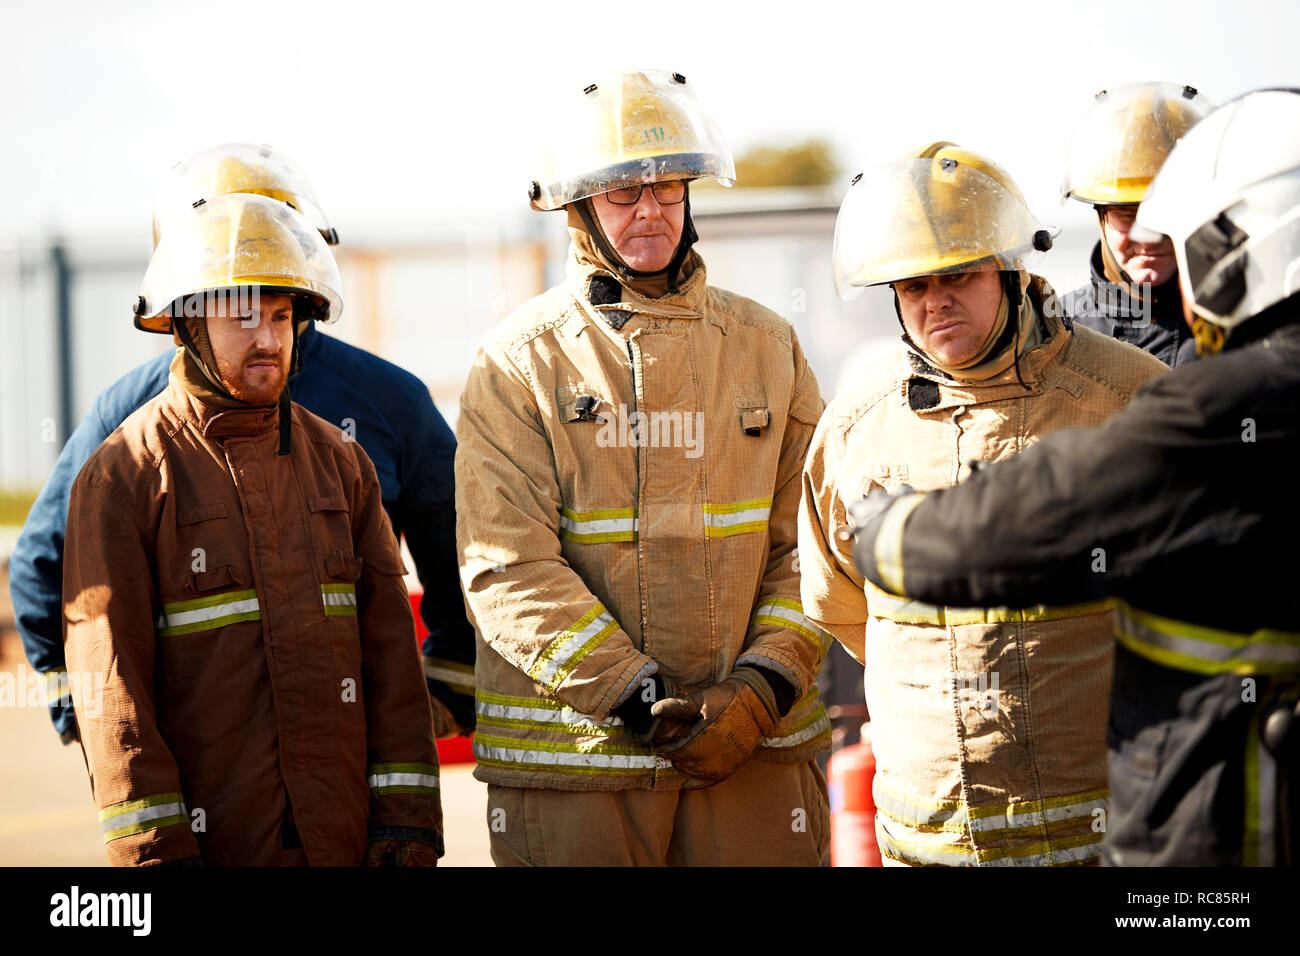 Firemen training, firemen listening to supervisor at training facility Stock Photo